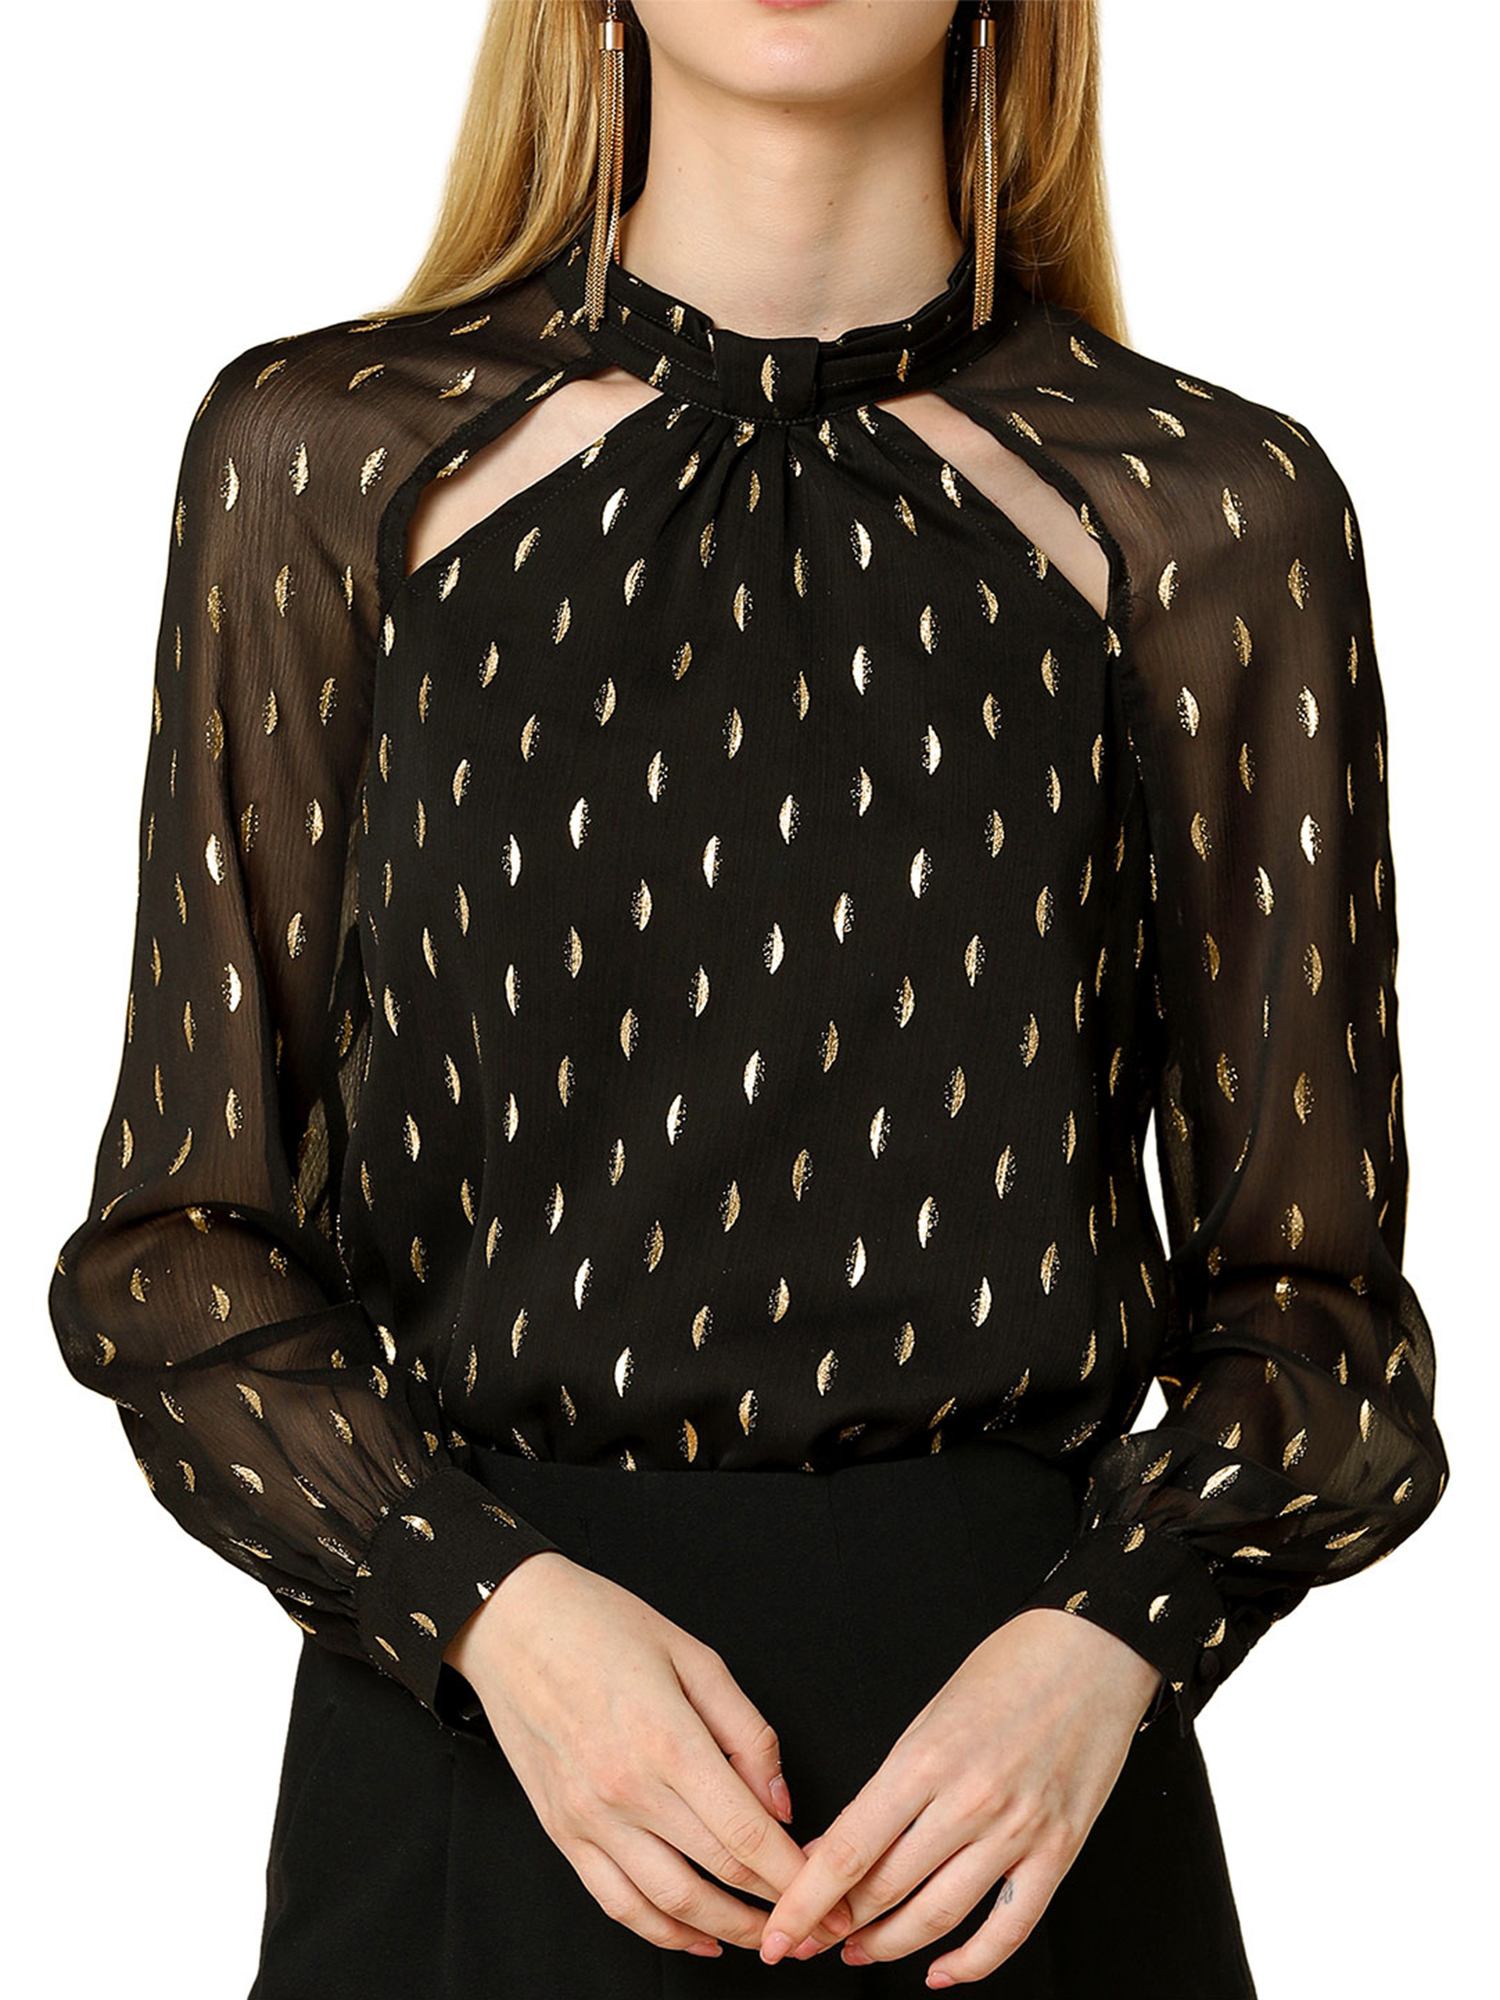 Unique Bargains Women's Cut Out Stand Collar Metallic Dots Blouses Chiffon Shirt Top - image 1 of 7